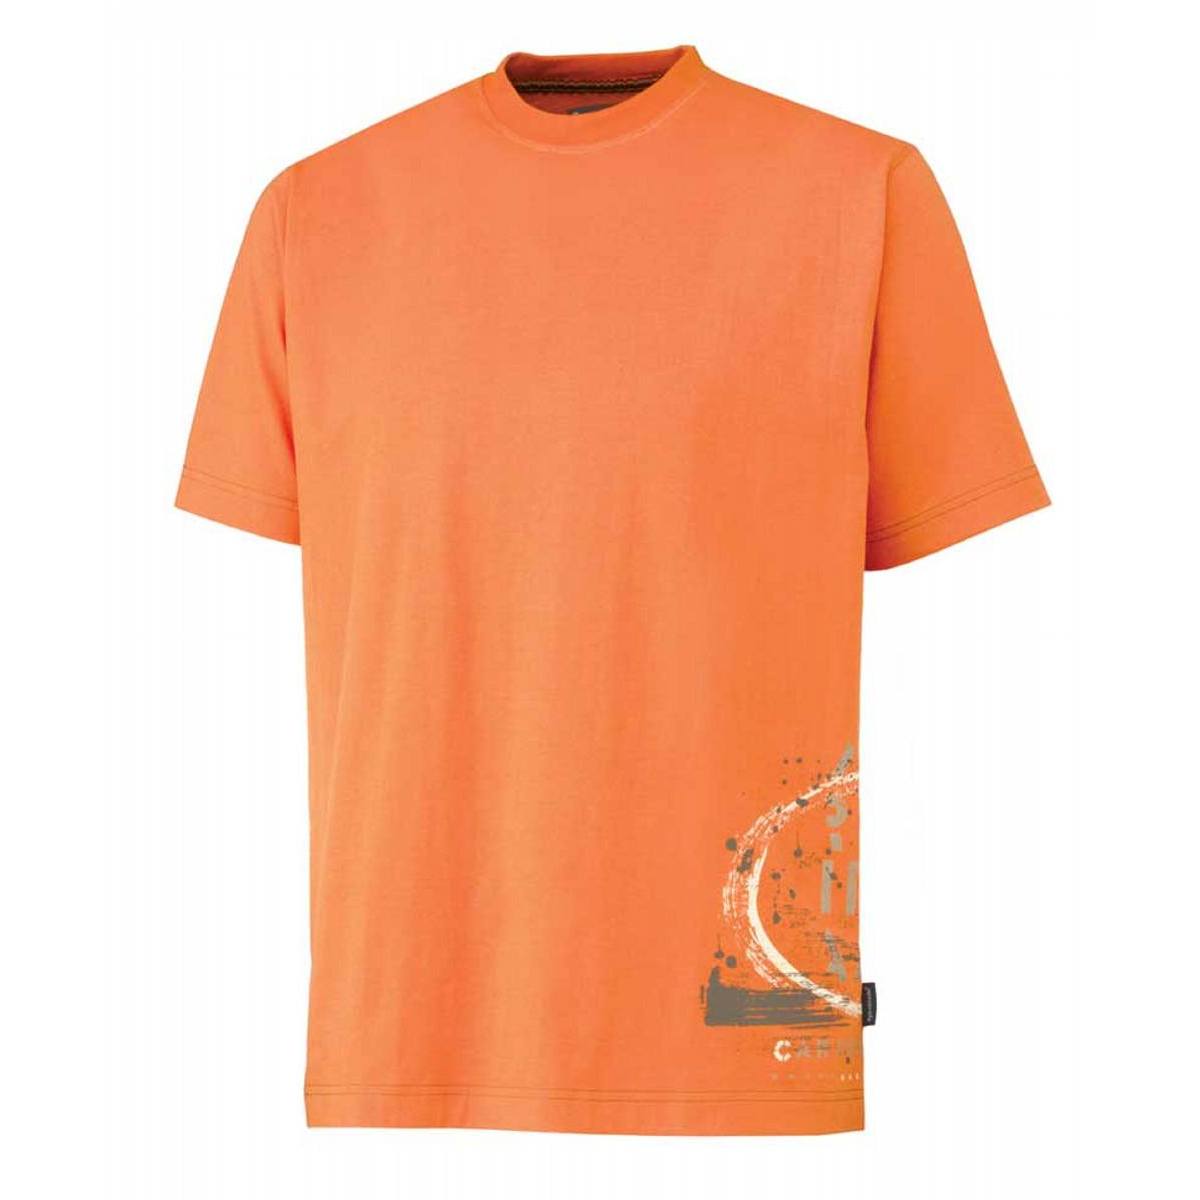 ACE T-shirt with print Orange - FaceLine Inc Store